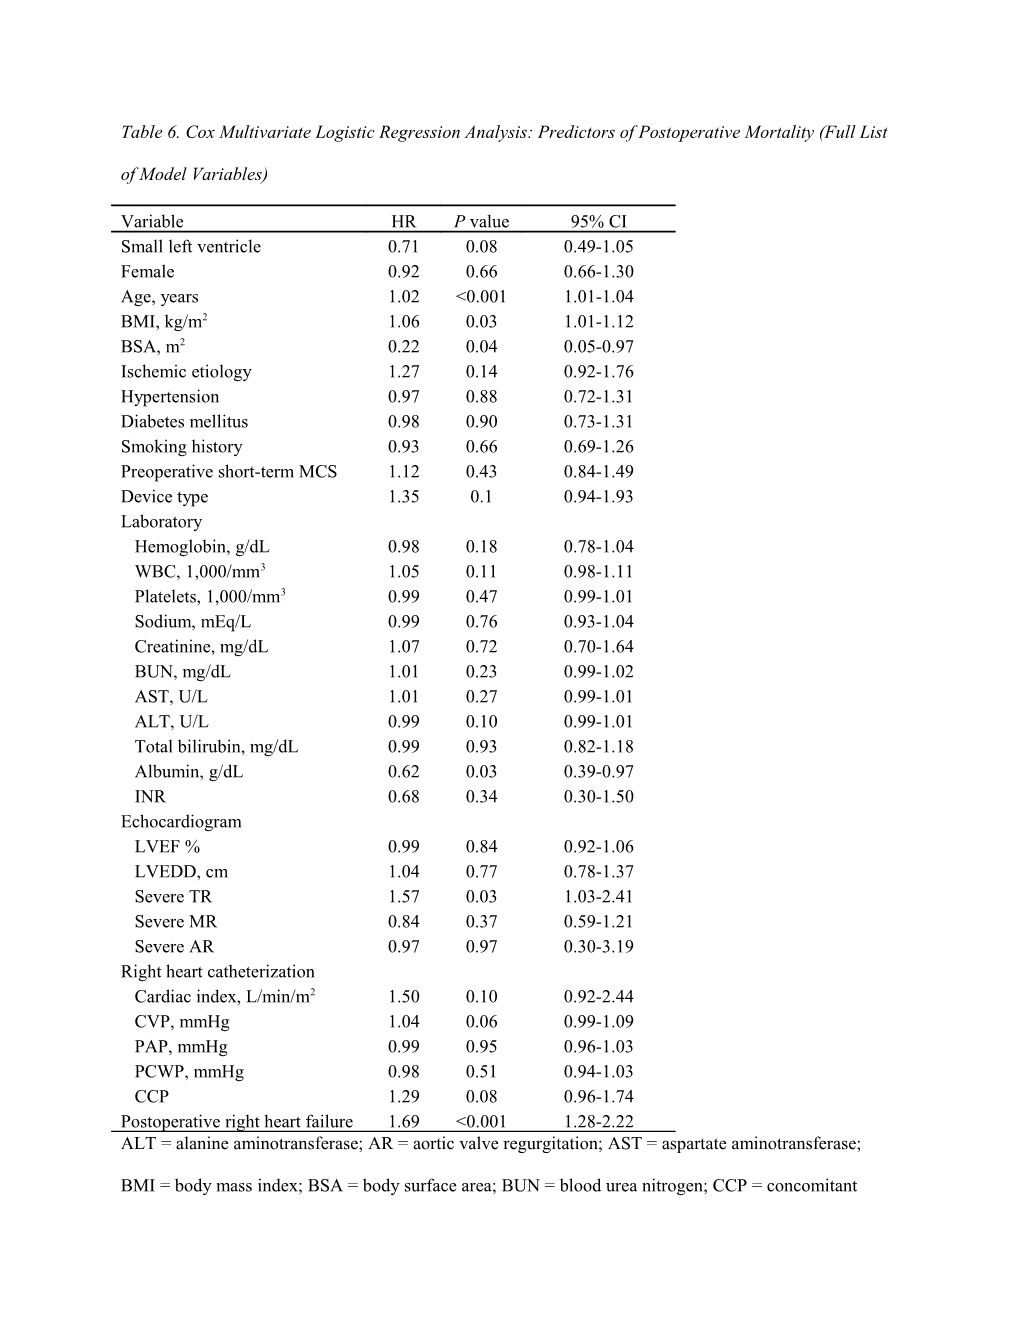 Table 6. Cox Multivariate Logistic Regression Analysis: Predictors of Postoperative Mortality